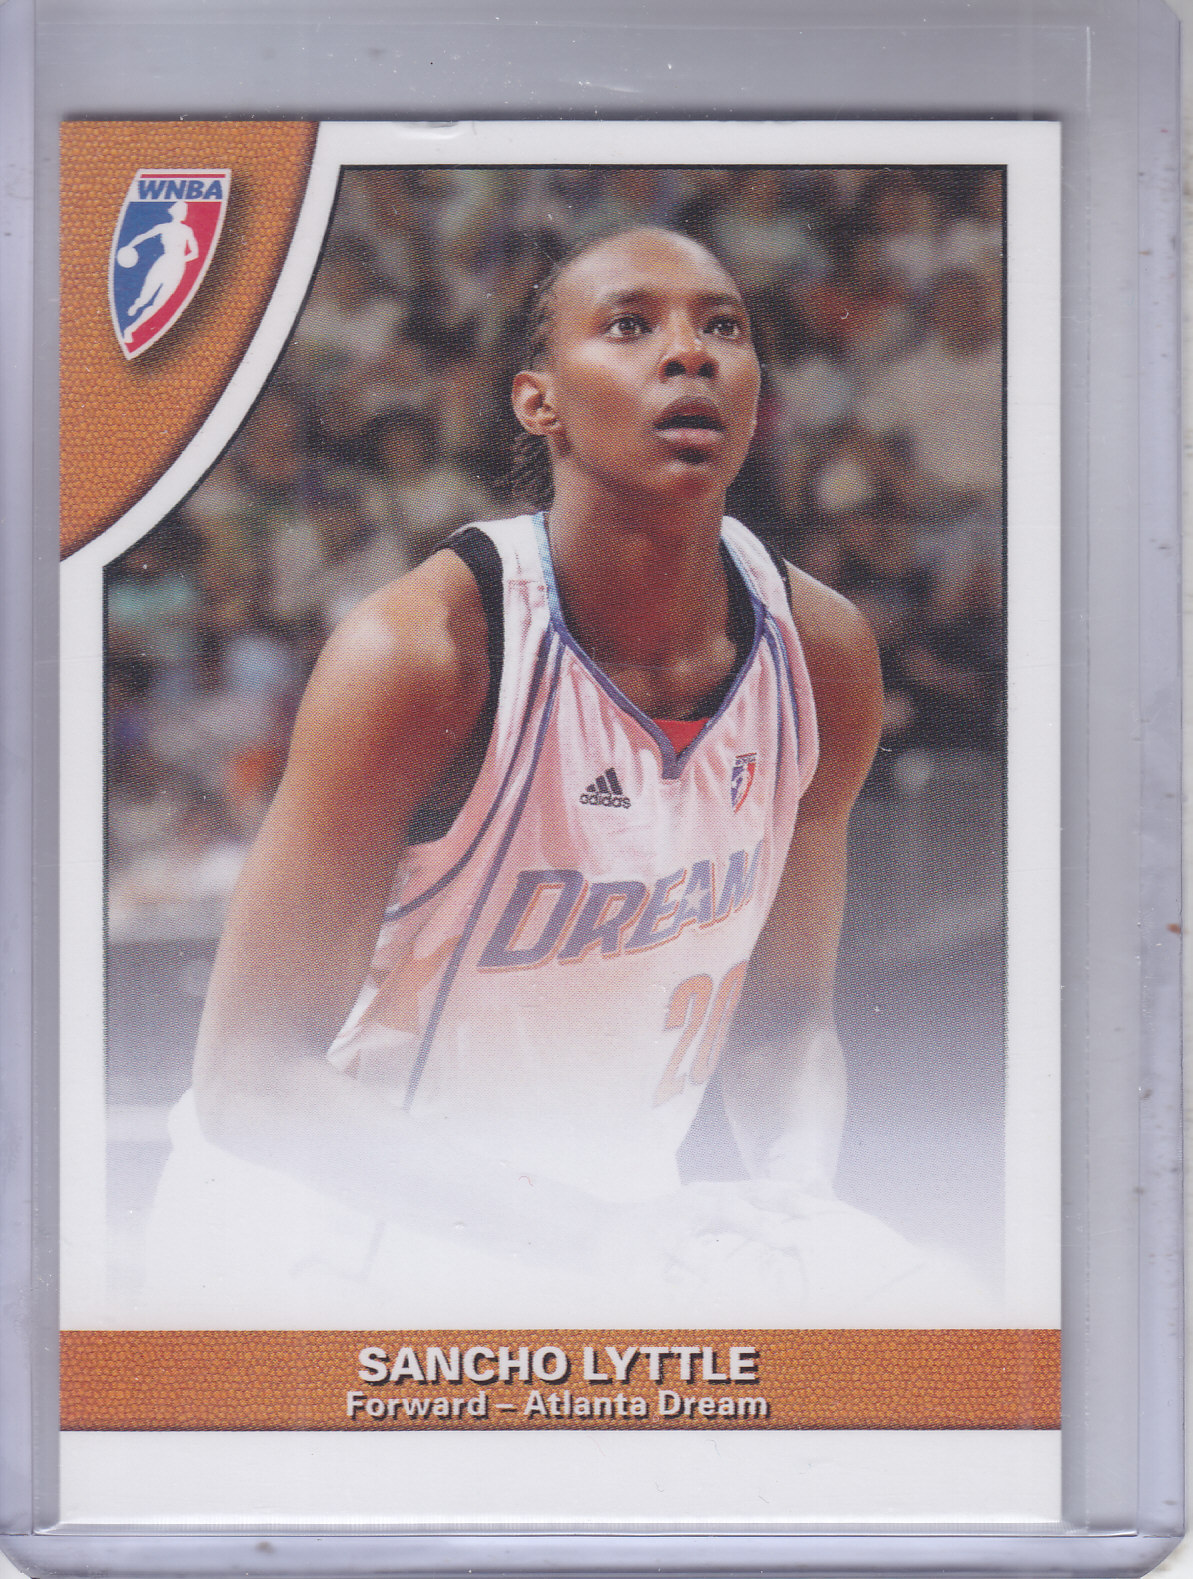 2010 WNBA #2 Sancho Lyttle/Alison Bales